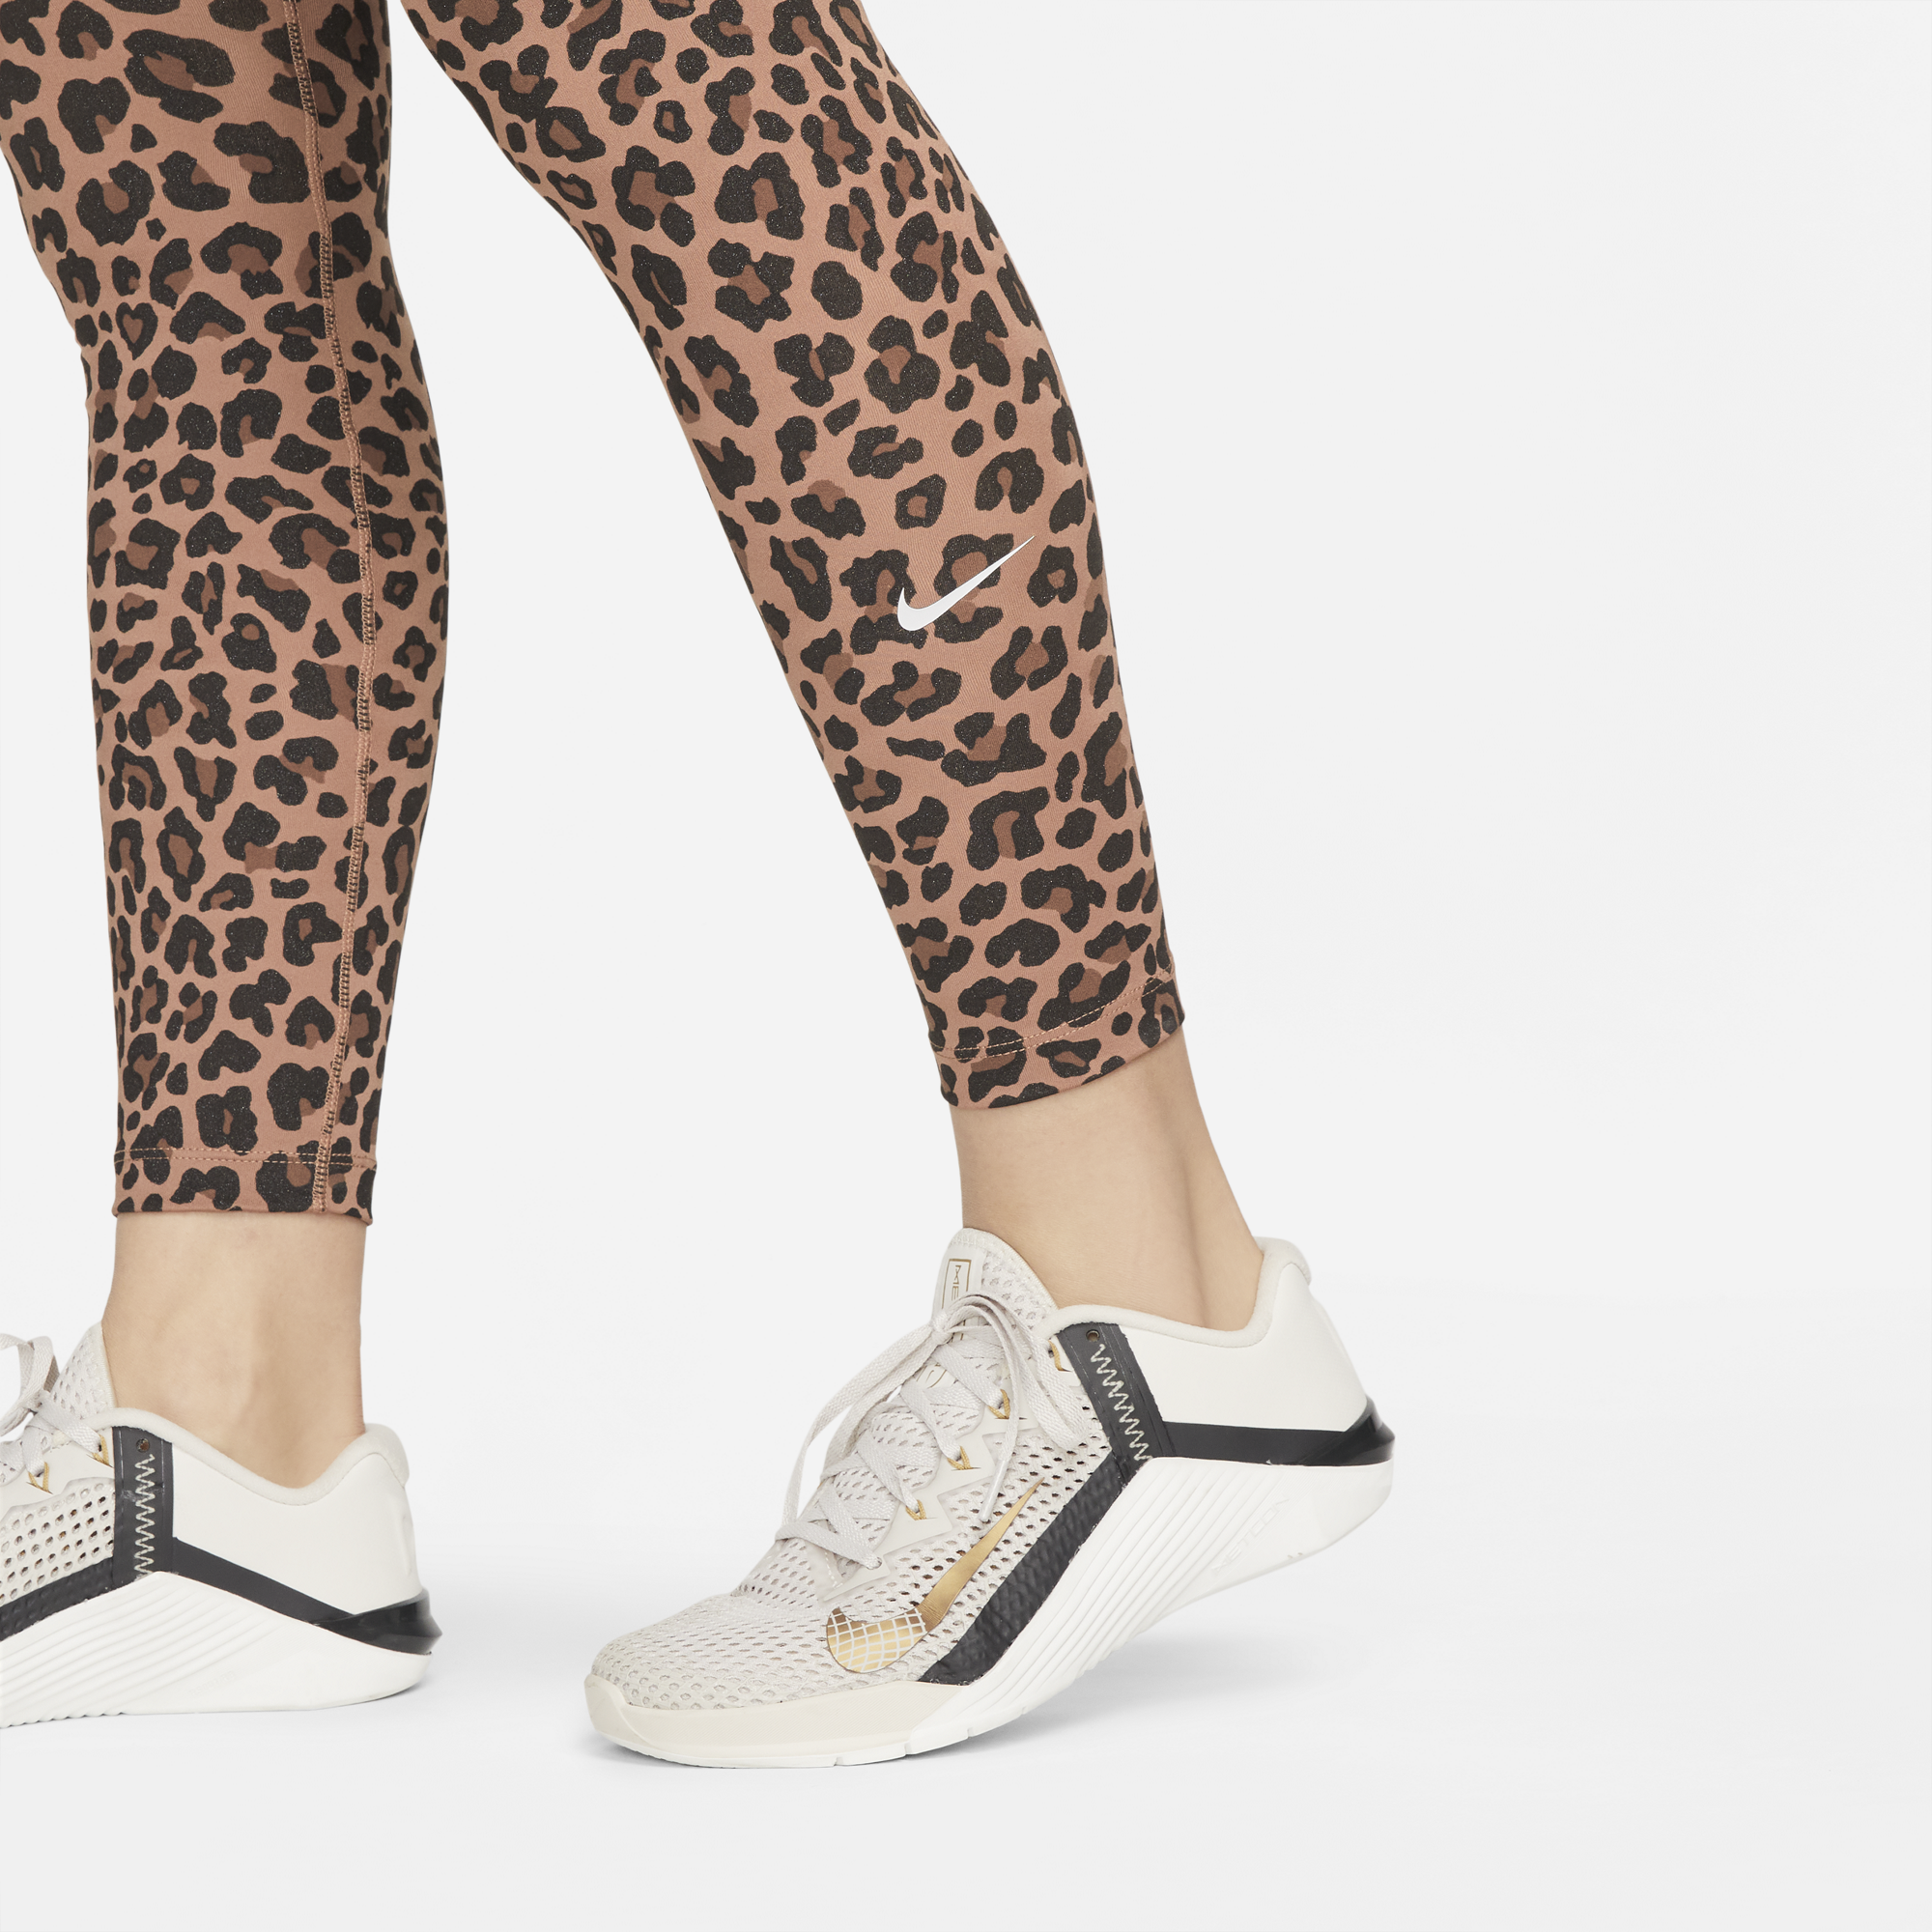 Nike The One Dri-Fit Leggings - Leopard Print, £42.25